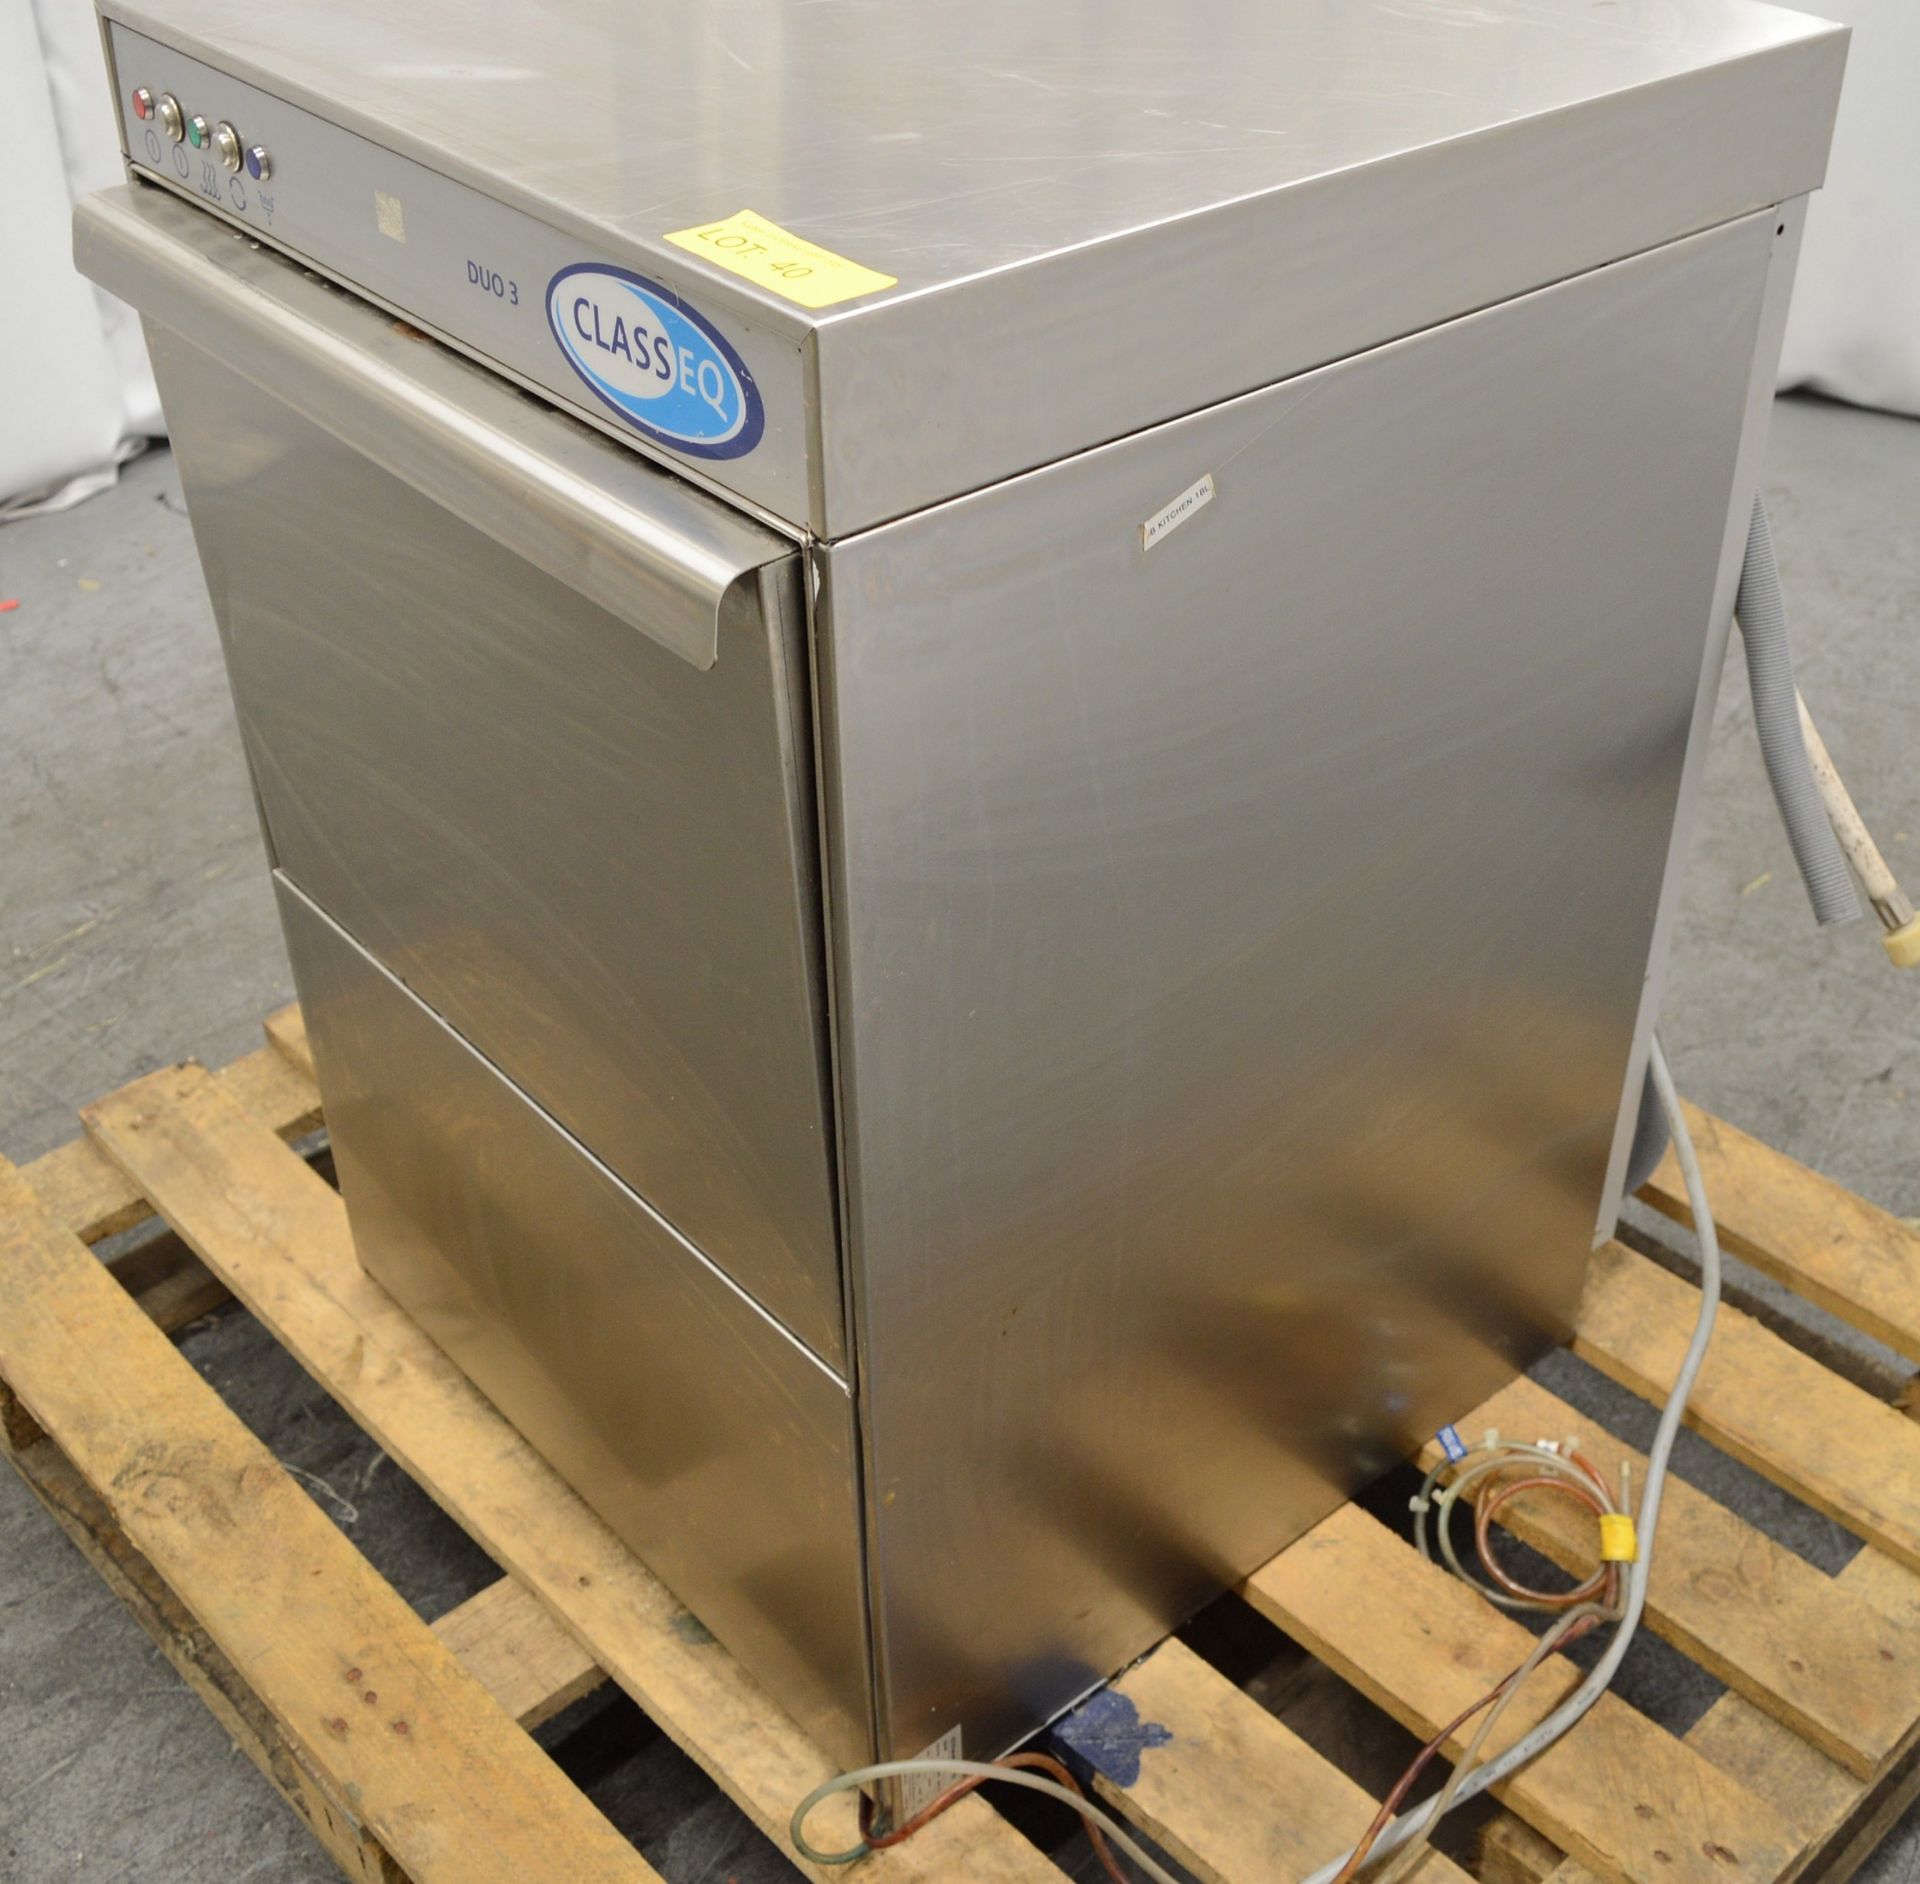 Class EQ DUO308 6.9kW Dishwasher. - Image 4 of 7